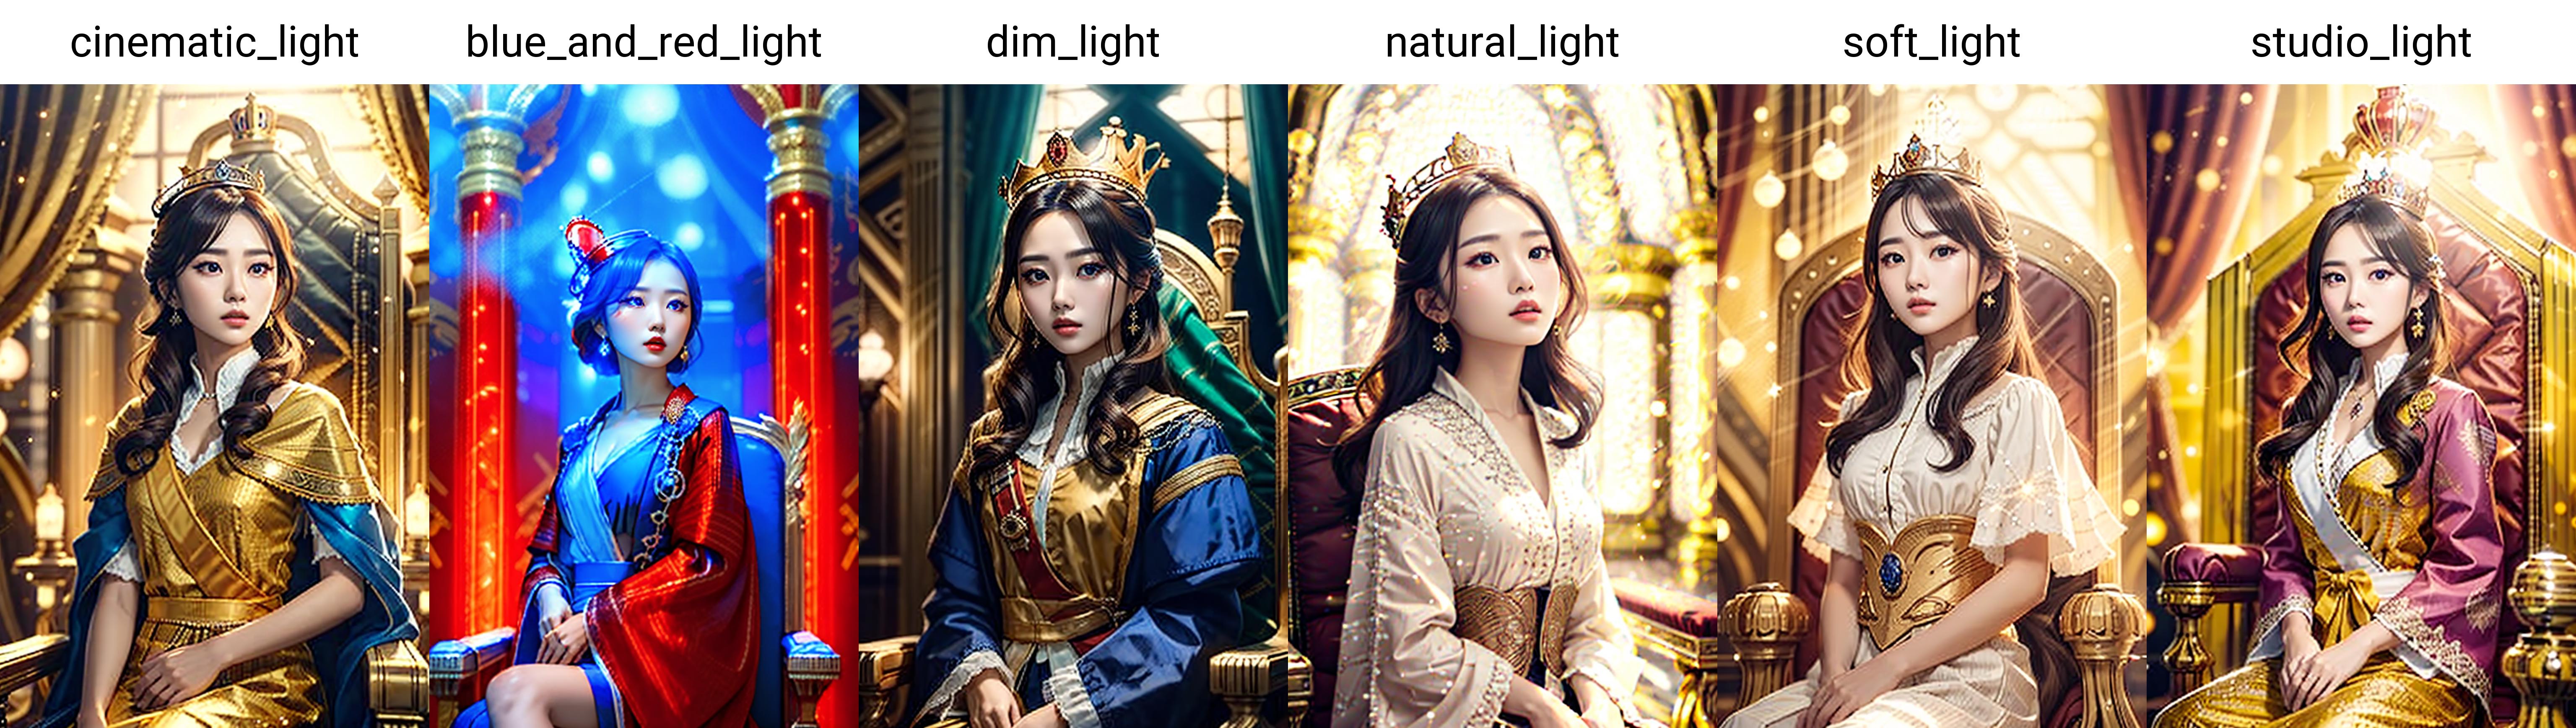 Light 6 in 1 光照技能包6合1 image by TangBohu